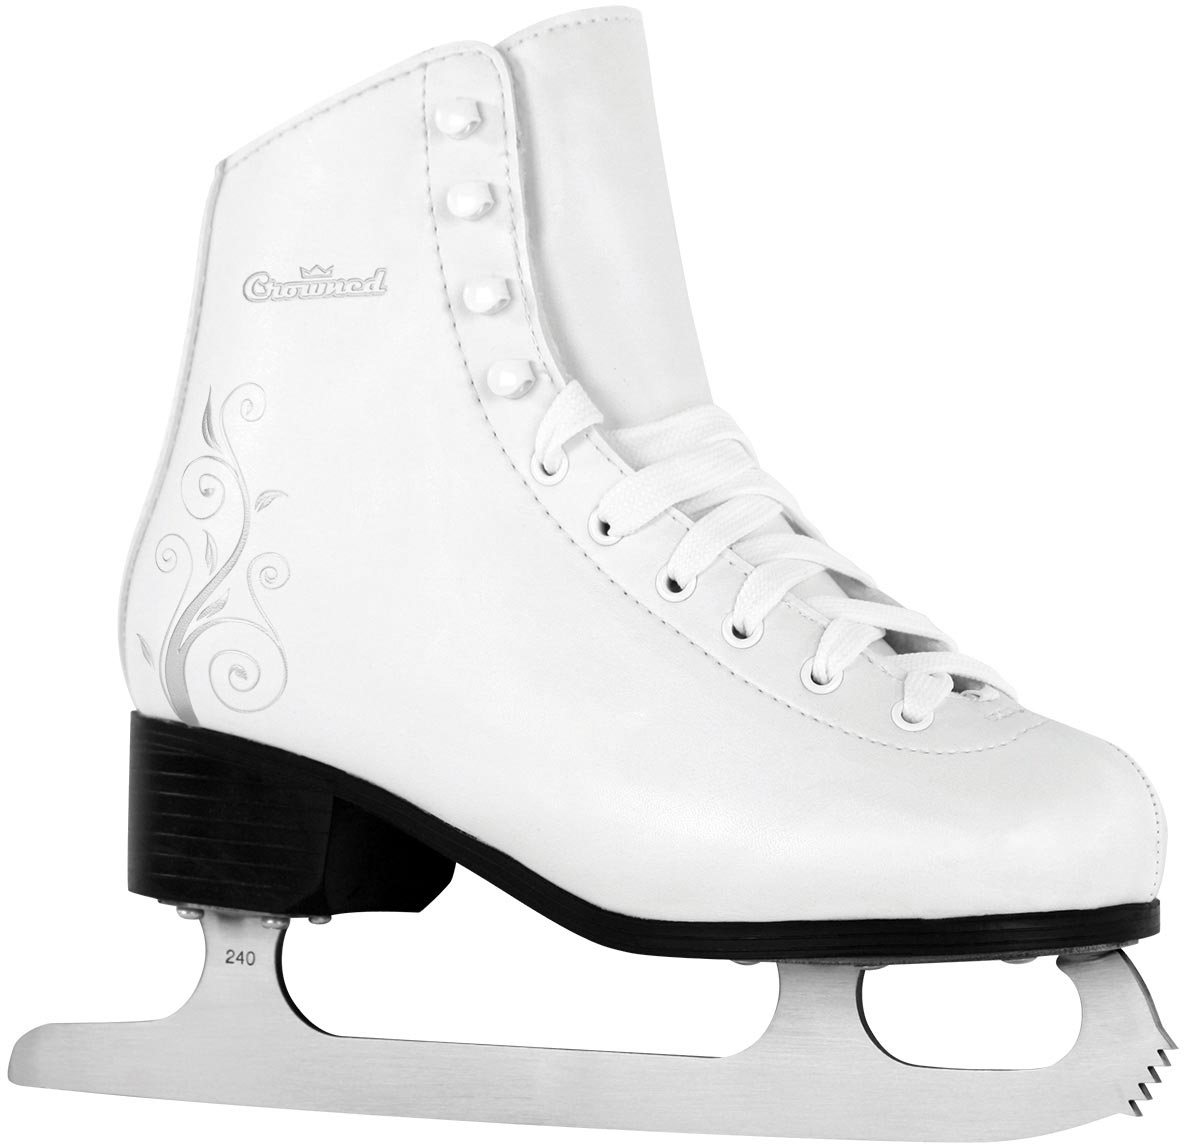 Girls’ ice skates